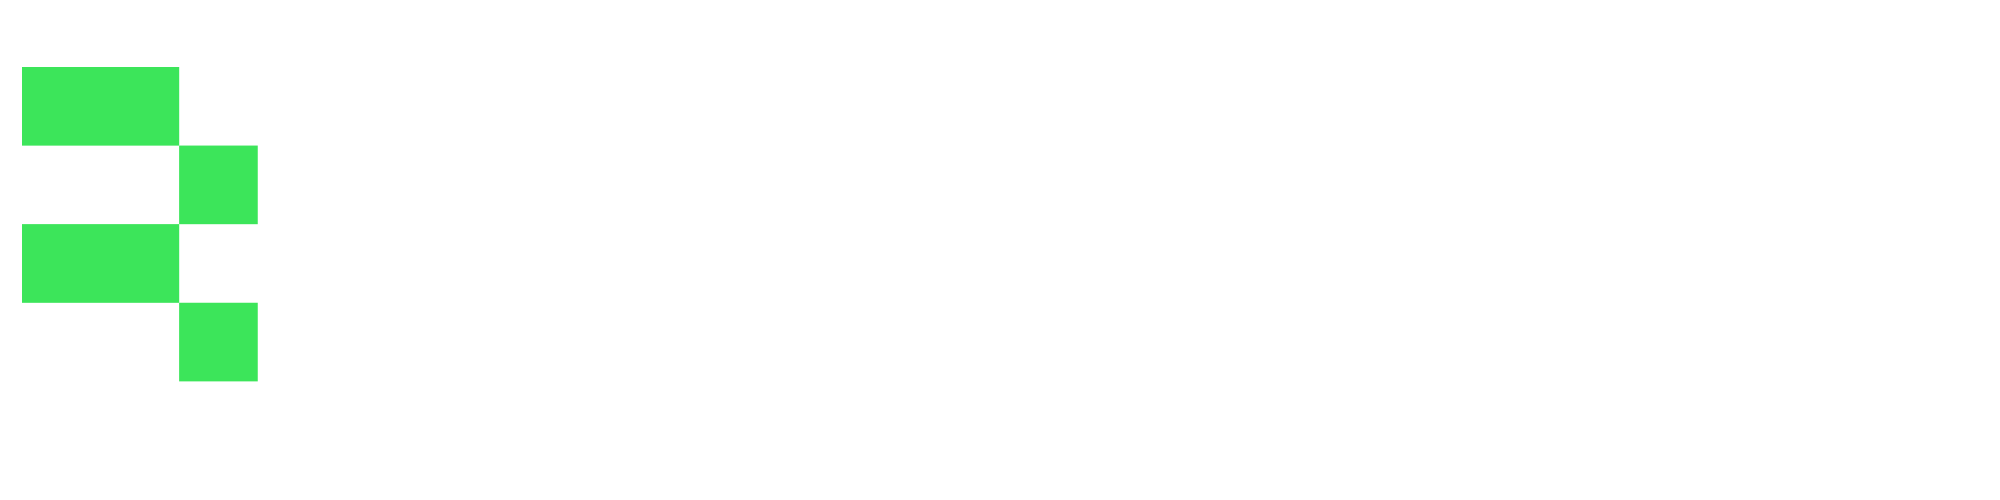 Regnology-logo-negative-PNG